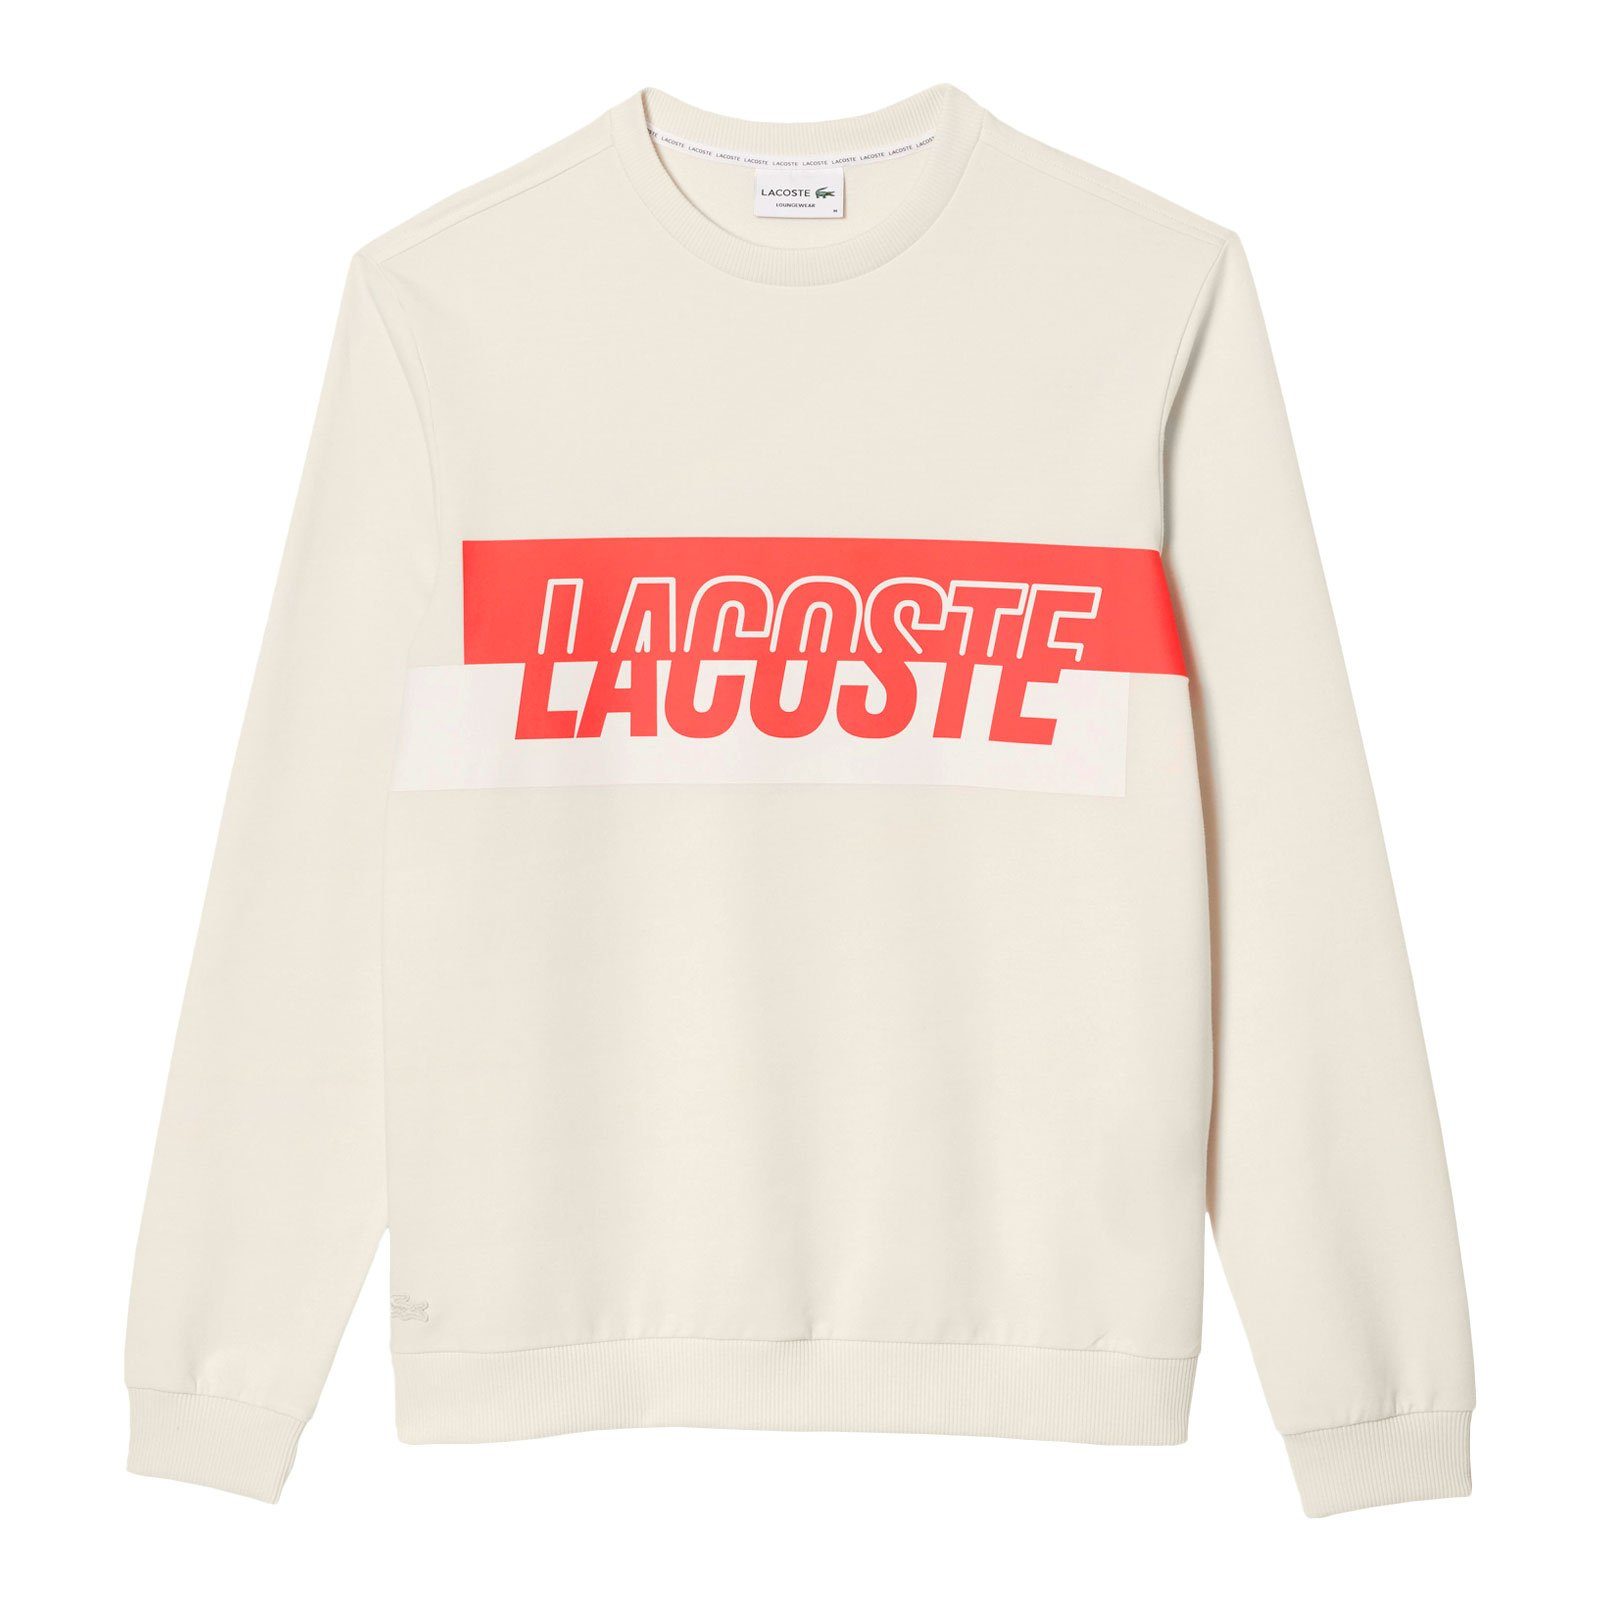 großem Sweatshirt Lacoste-Kontrast-Print mit Sweatshirt Lacoste